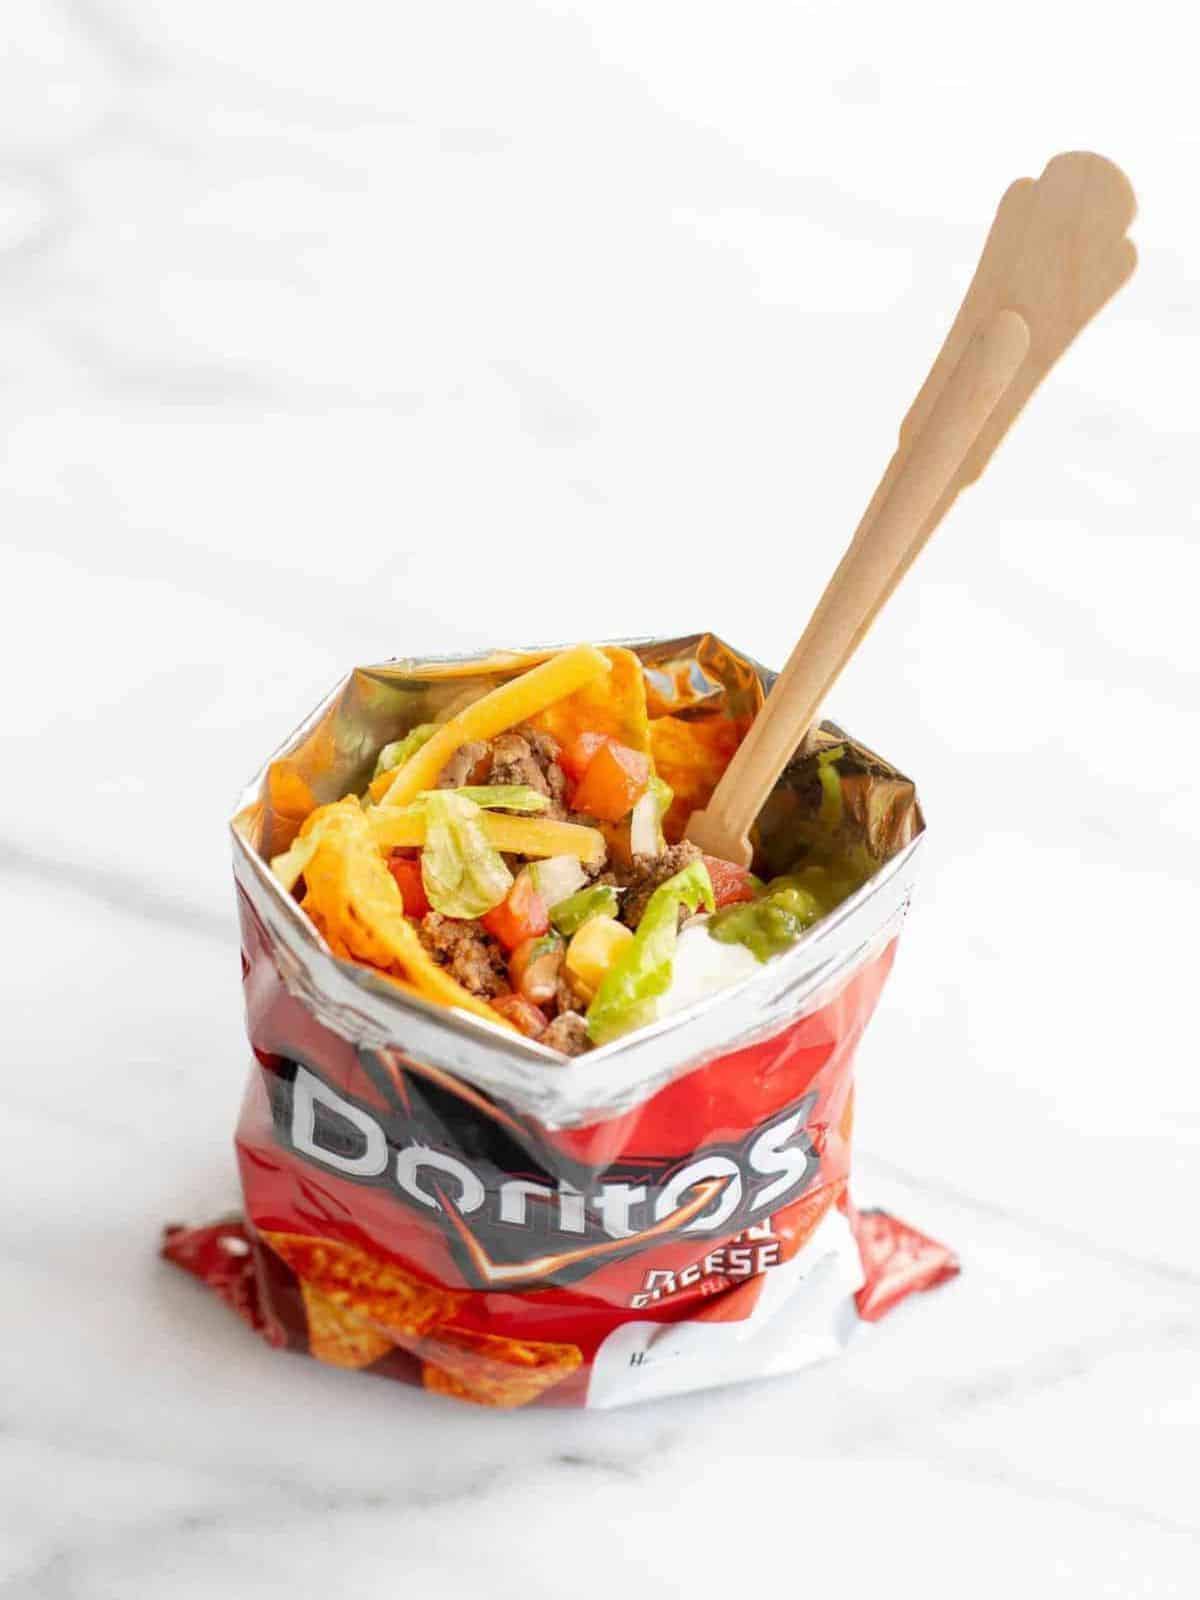 walking taco in dorito bag with fork in it